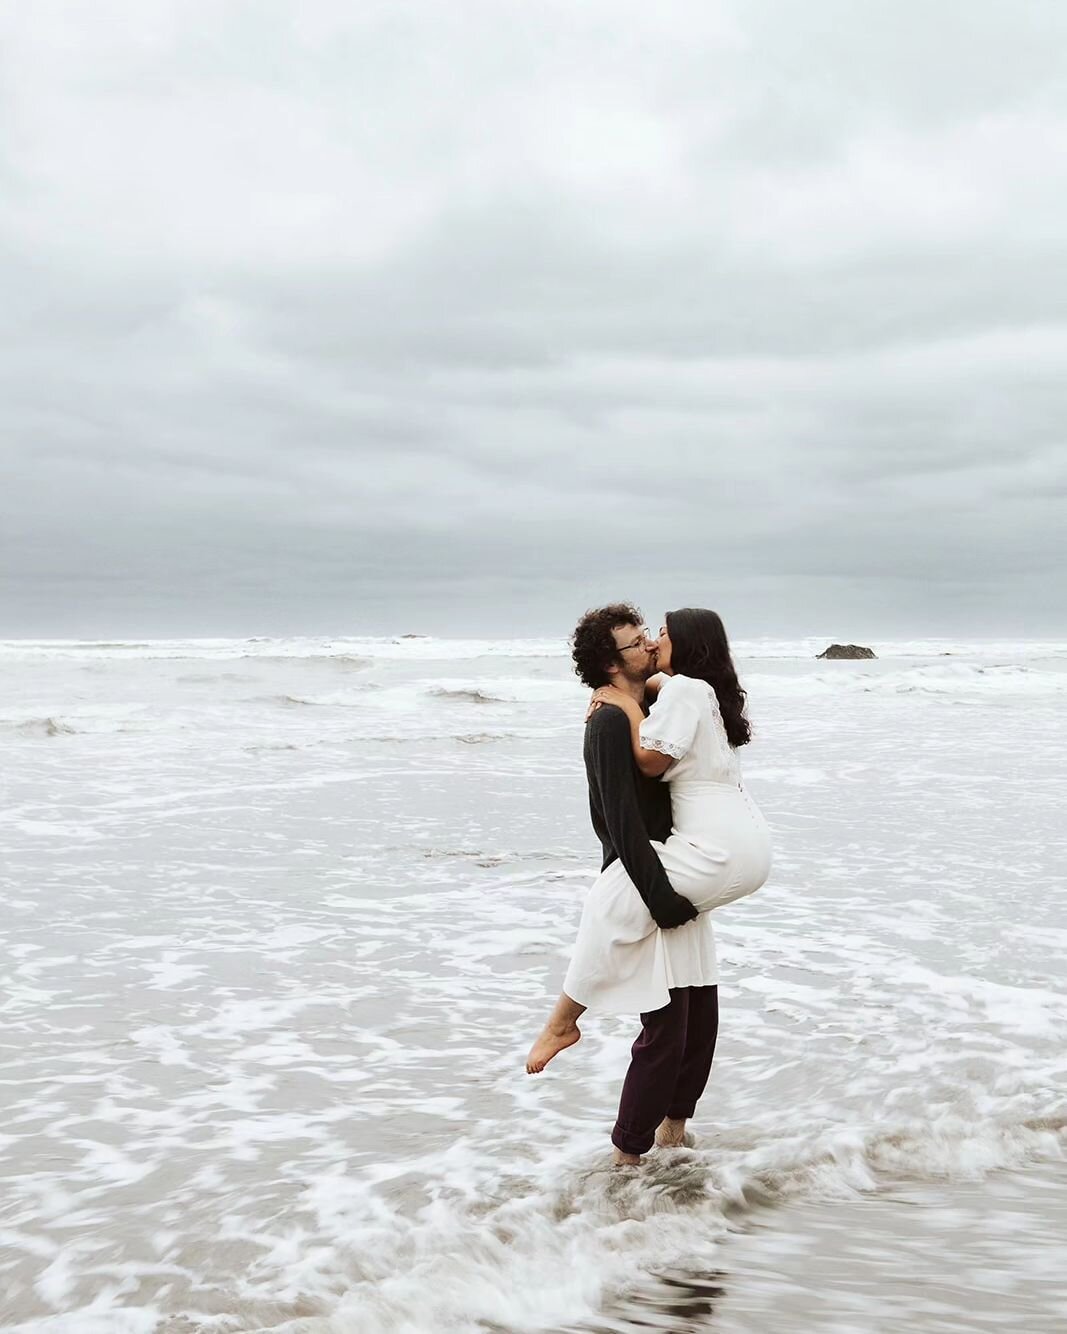 Rain or shine, the coast is always a good idea. 

Keywords: Pnw Washington Engagement Elopement Wedding Photographer Beach Olympic National Park